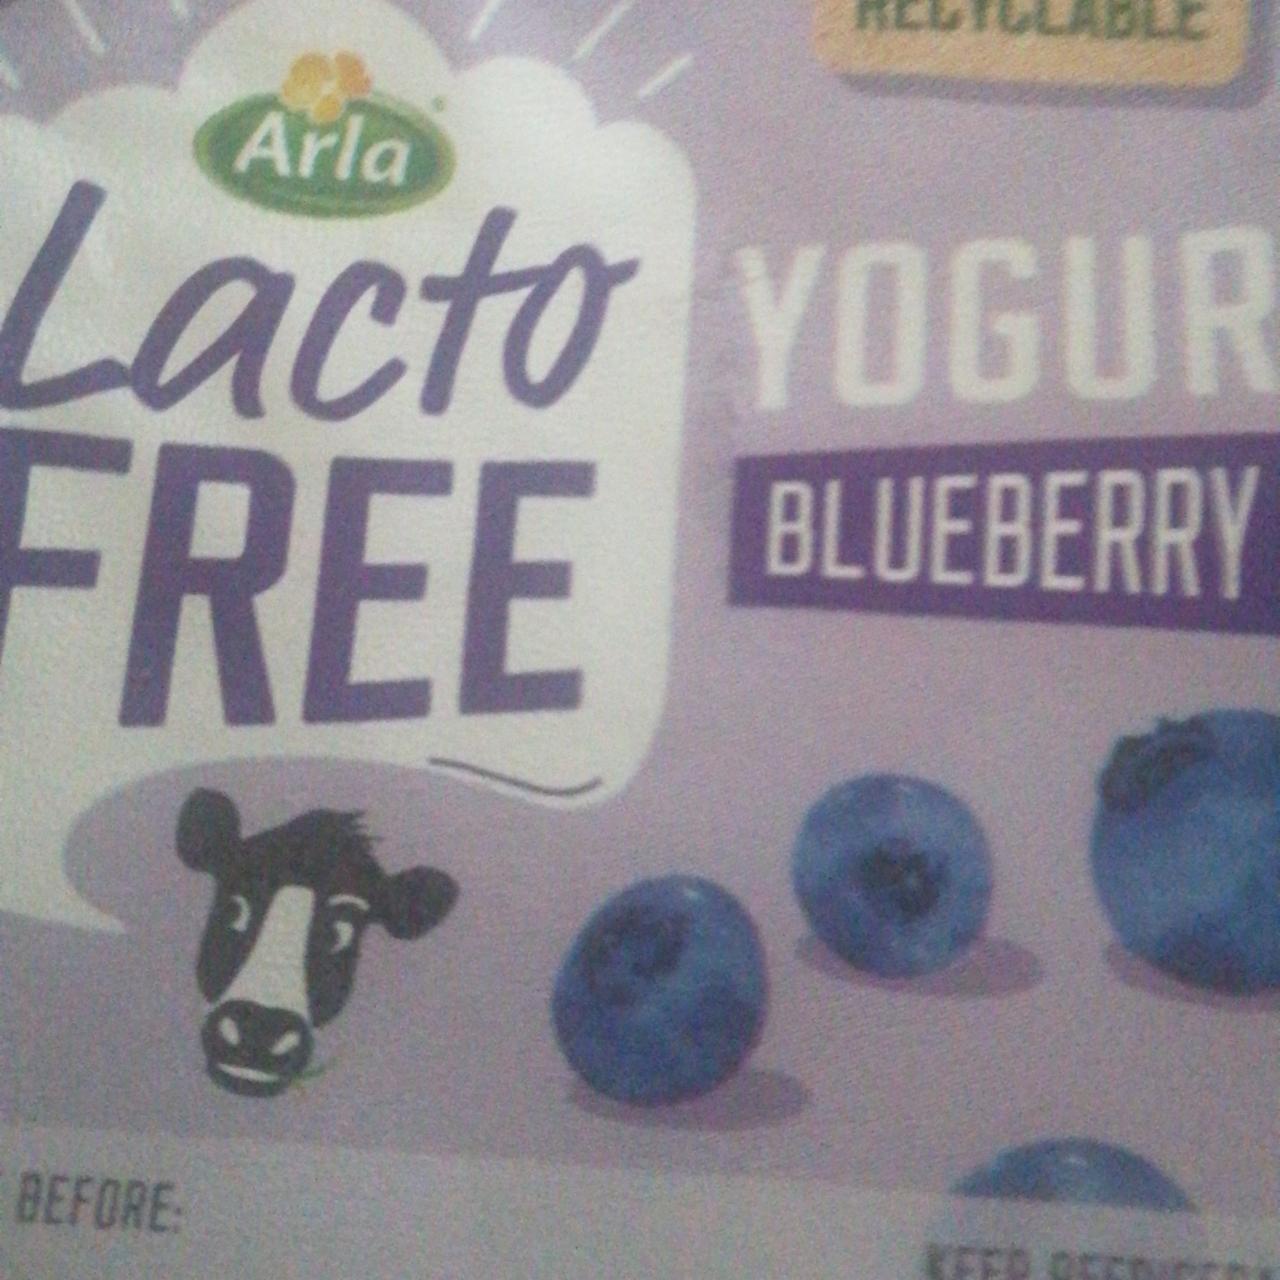 Fotografie - Lacto free yogurt blueberry Arla